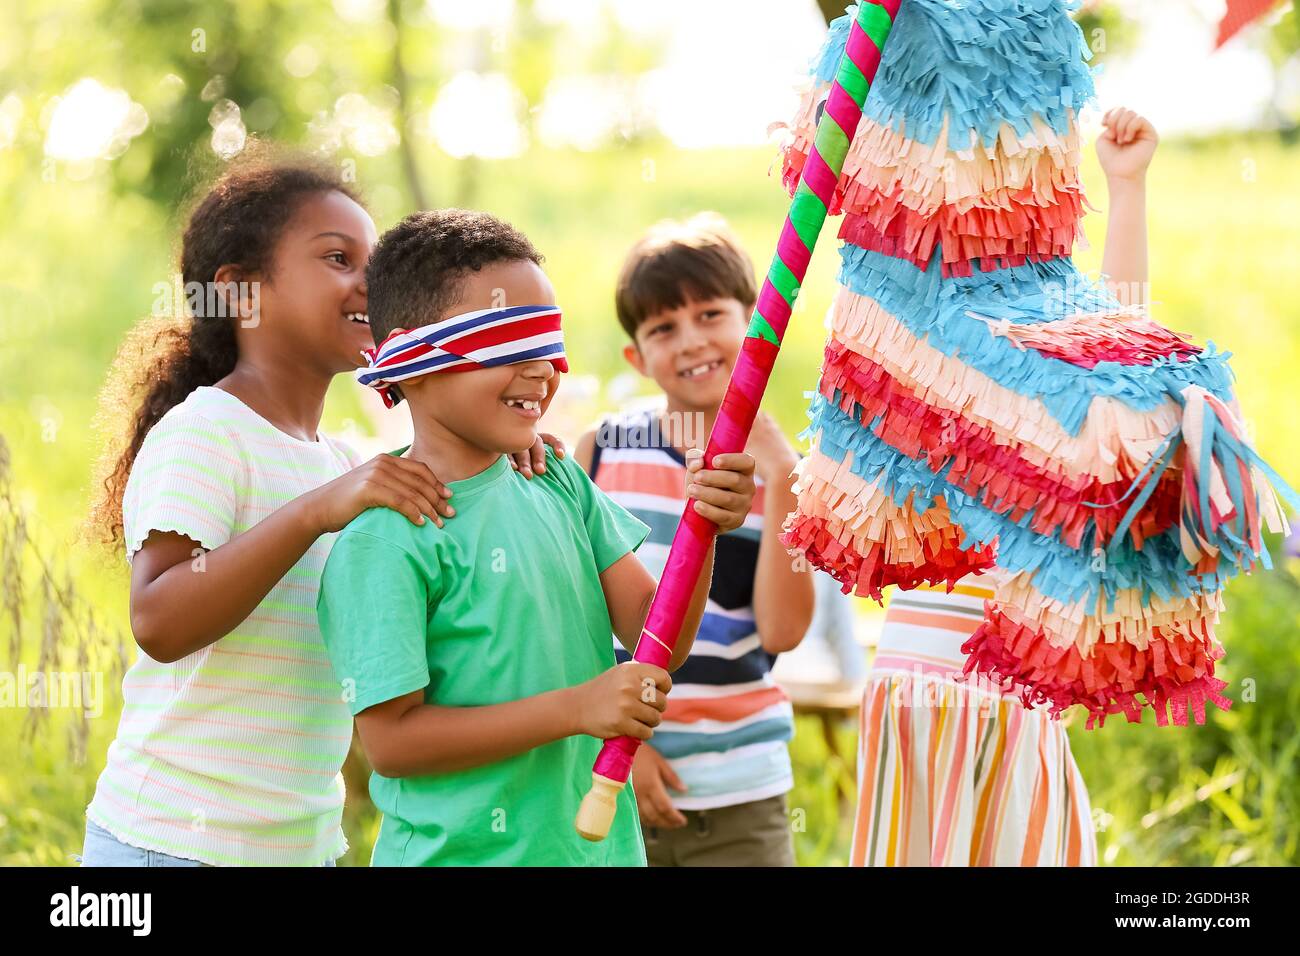 Cute children at pinata birthday party Stock Photo - Alamy